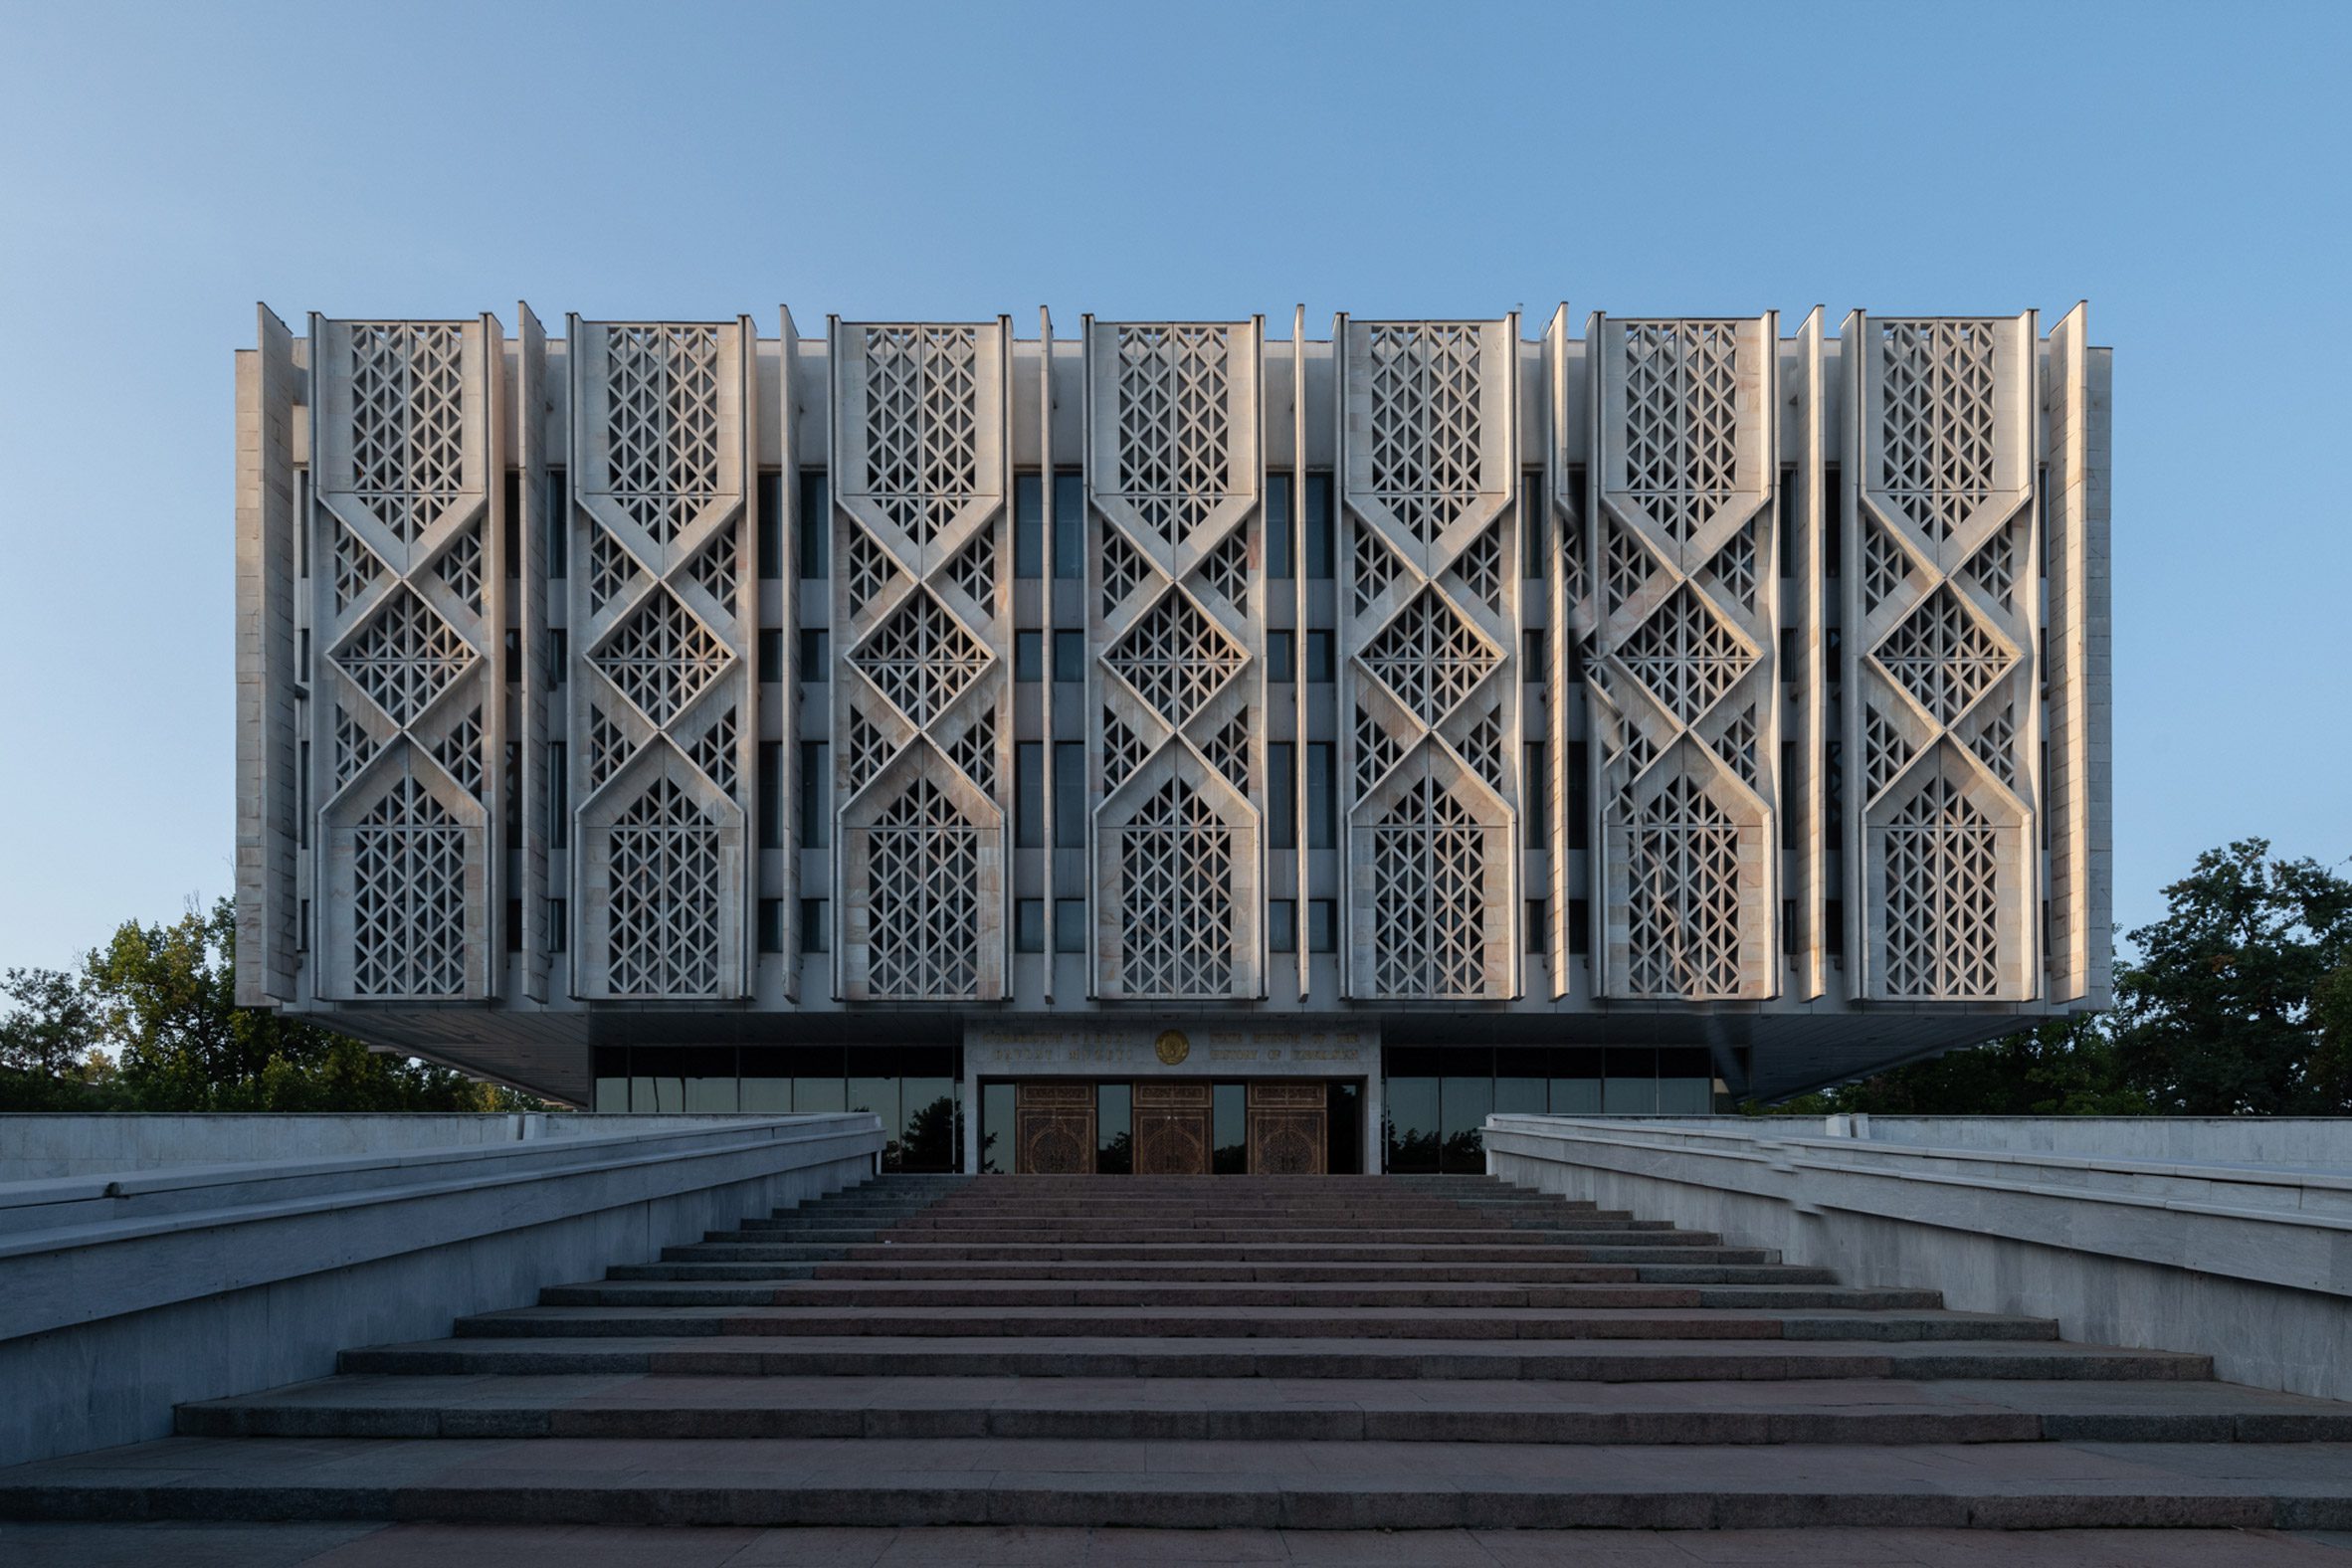 Tashkent's Soviet modernist architecture